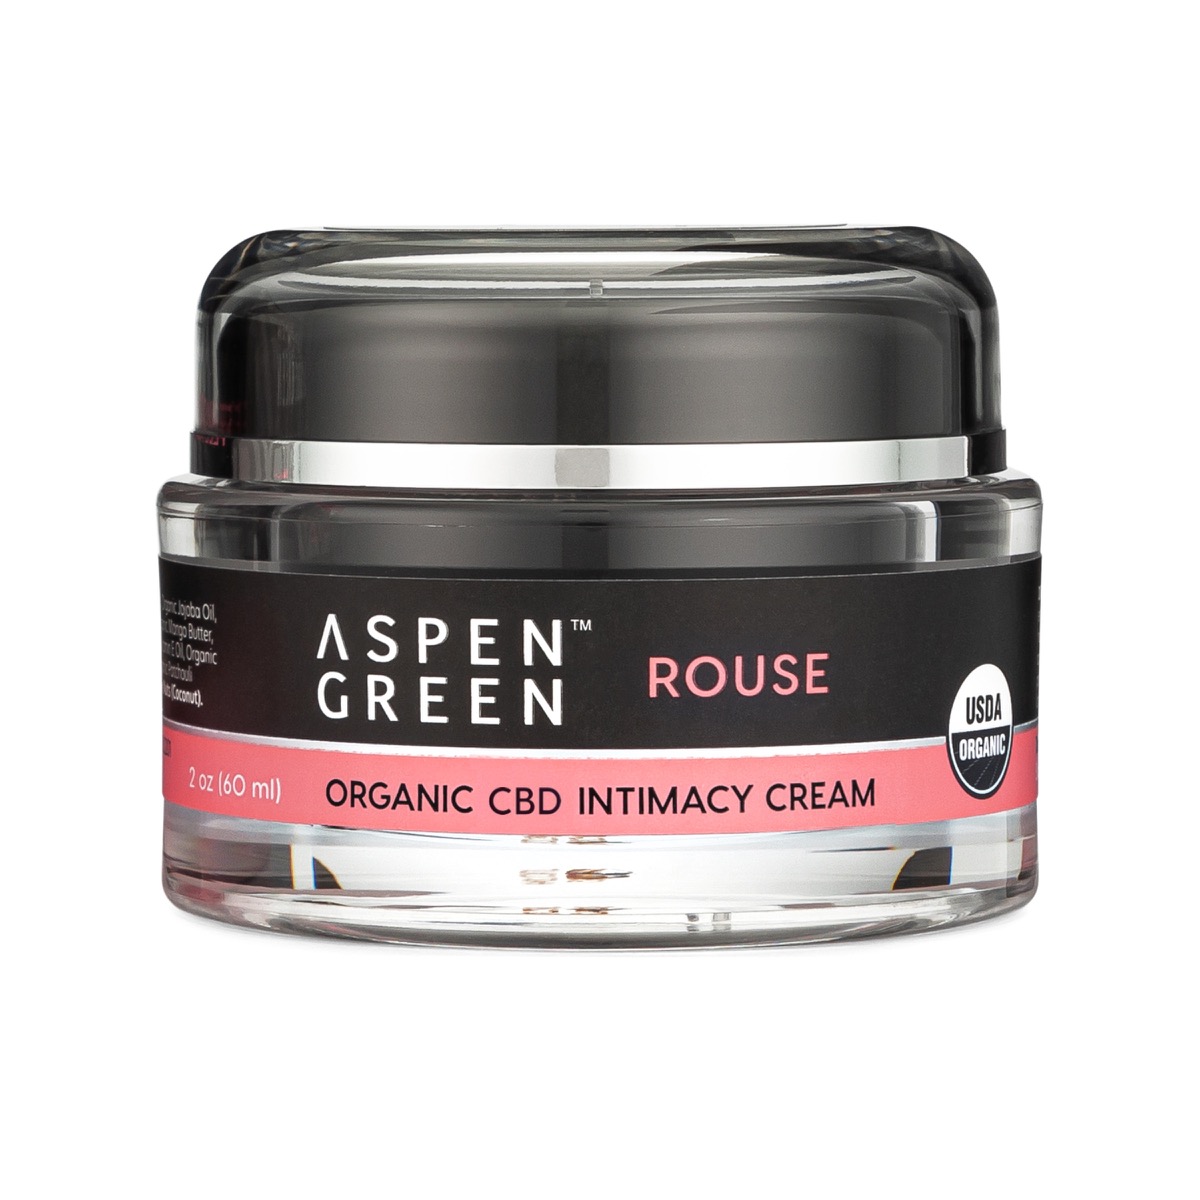 Aspen Green Rouse Full Spectrum CBD Intimacy Cream - USDA Certified Organic, 6700mg CBD